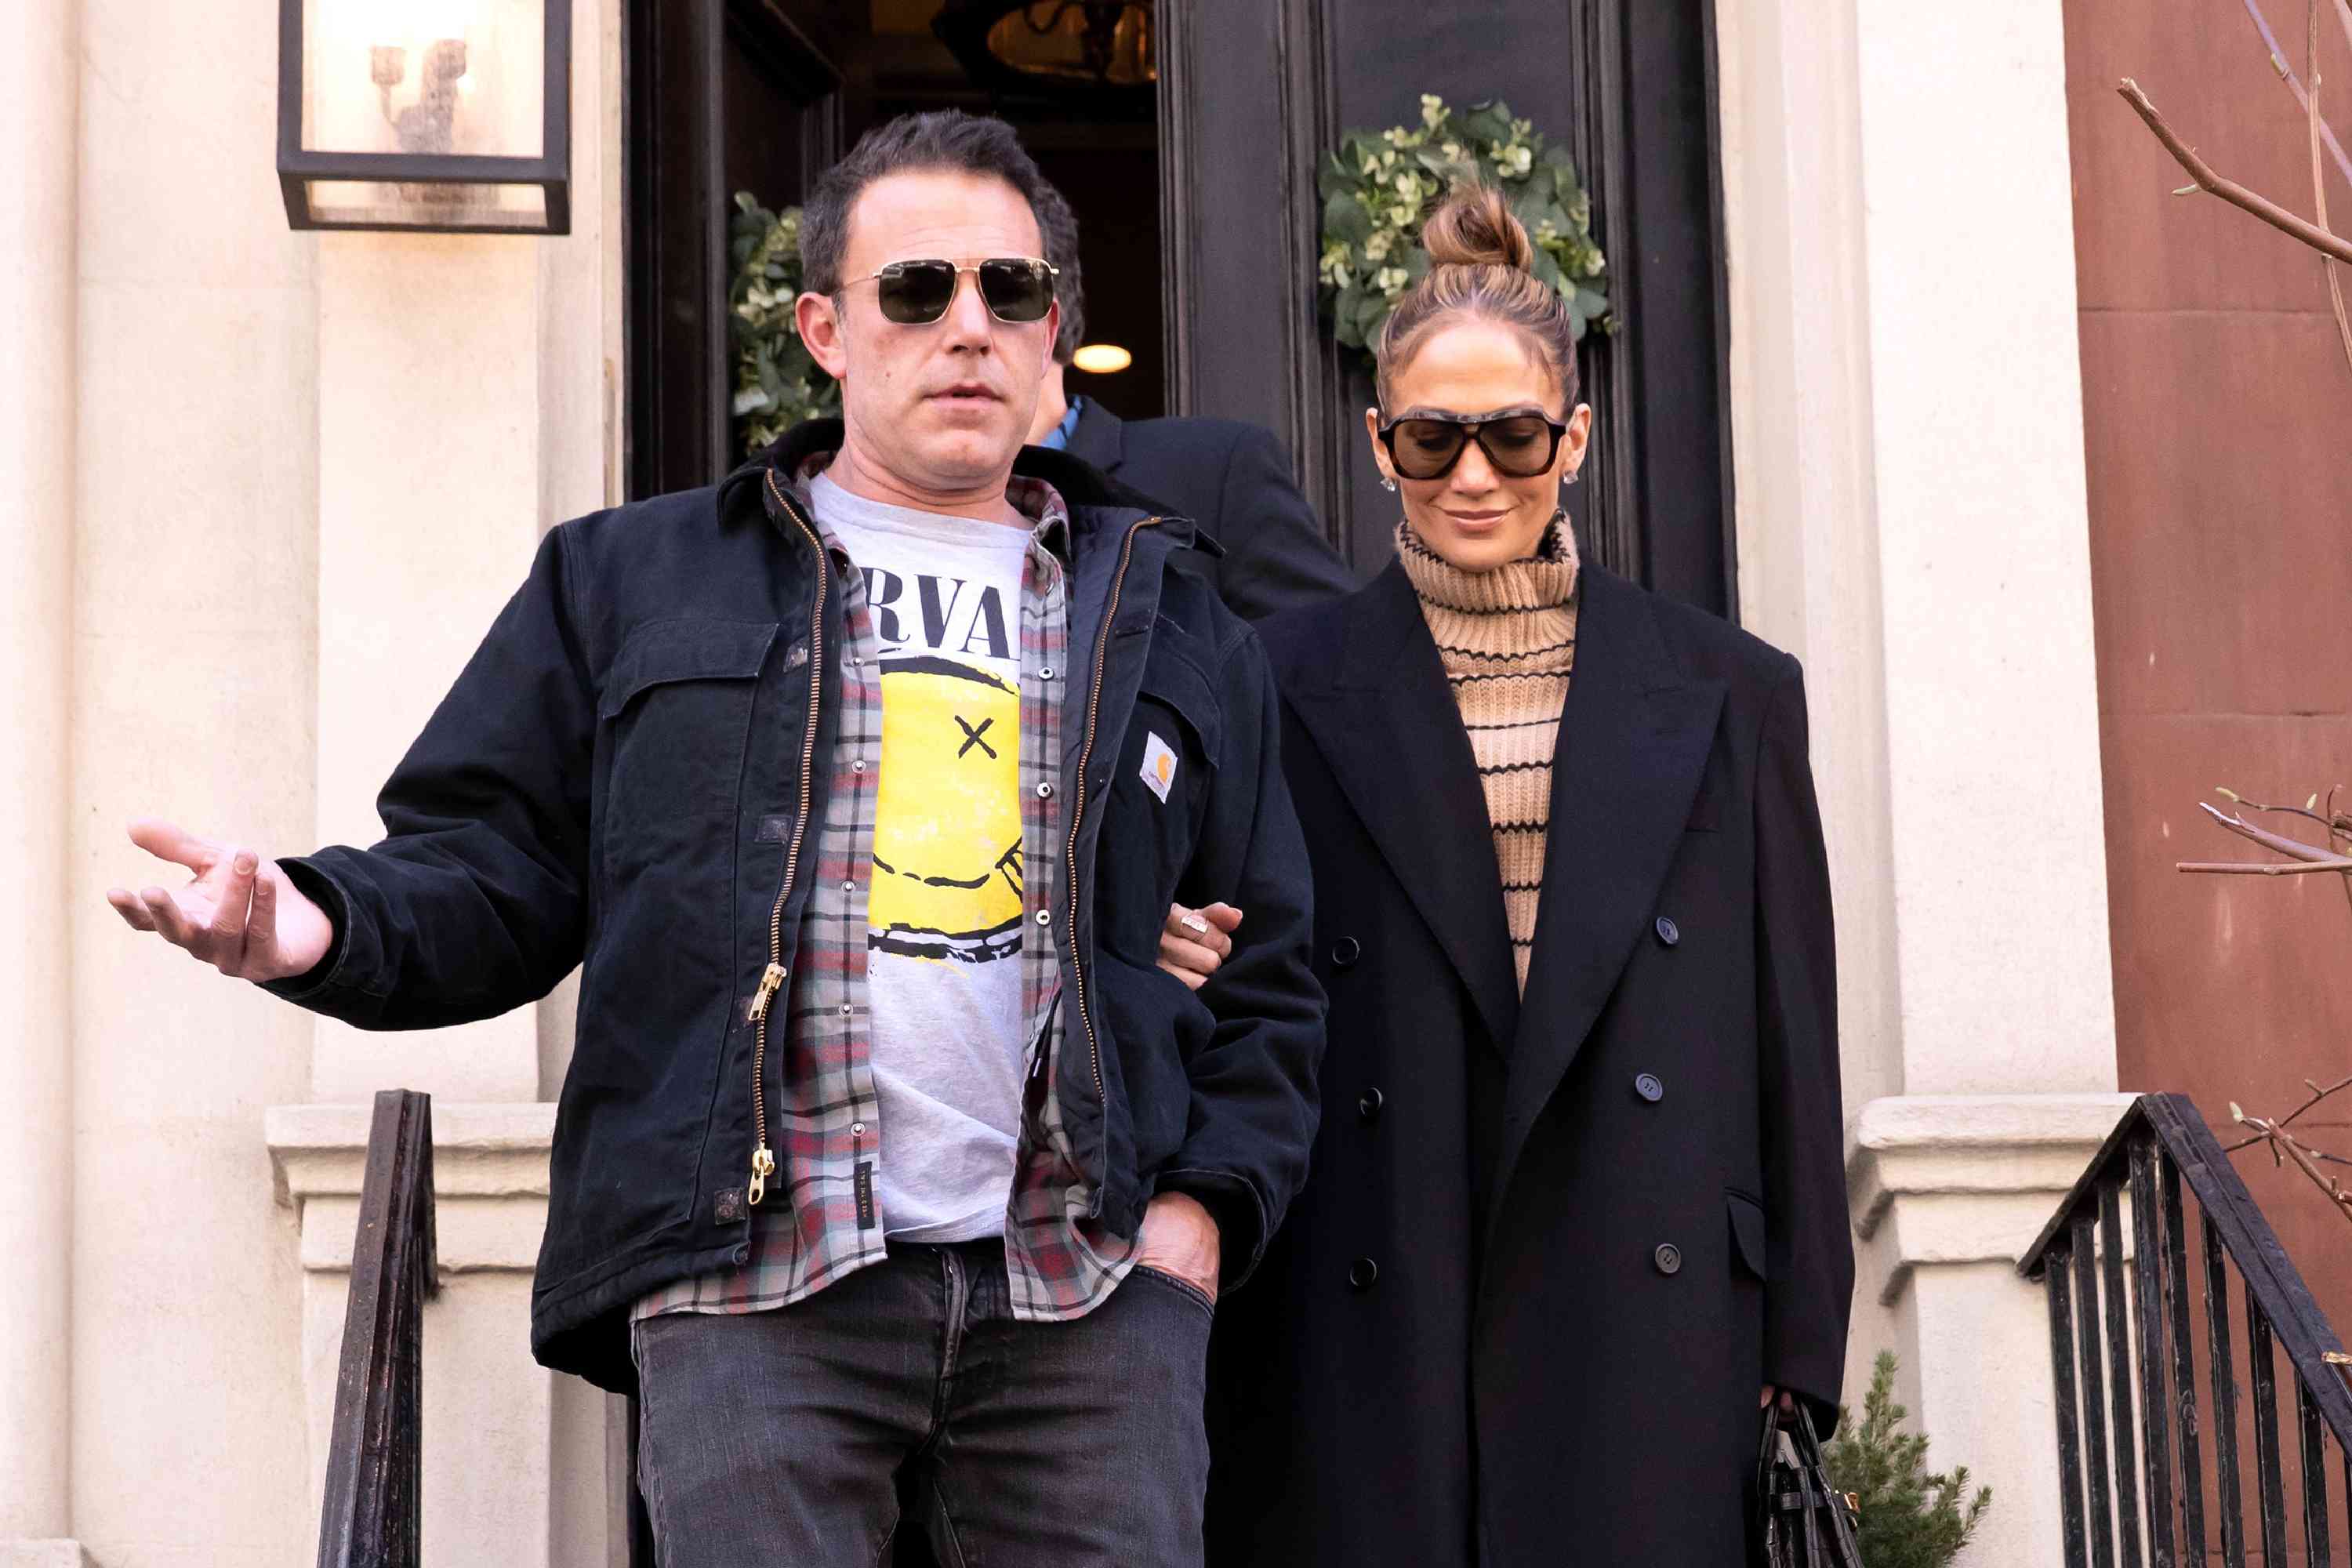 Jennifer Lopez "Likes" Post About Unhealthy Relationships Amid Ben Affleck Divorce Rumors